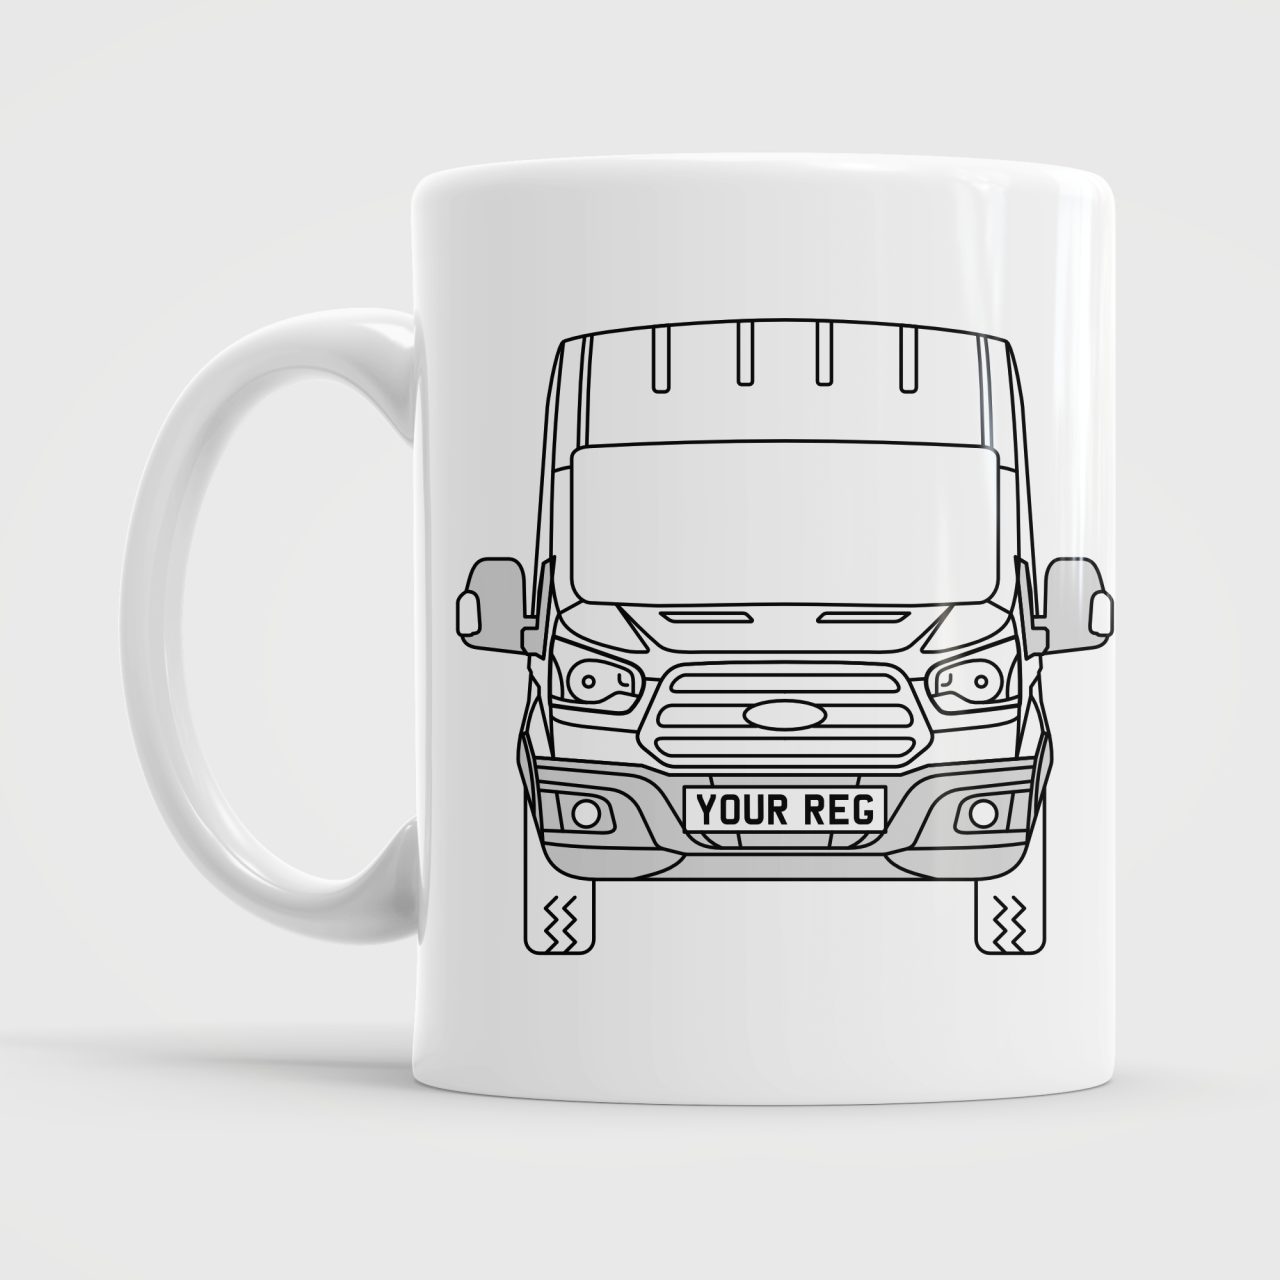 Ford Transit Ceramic Mug Cup